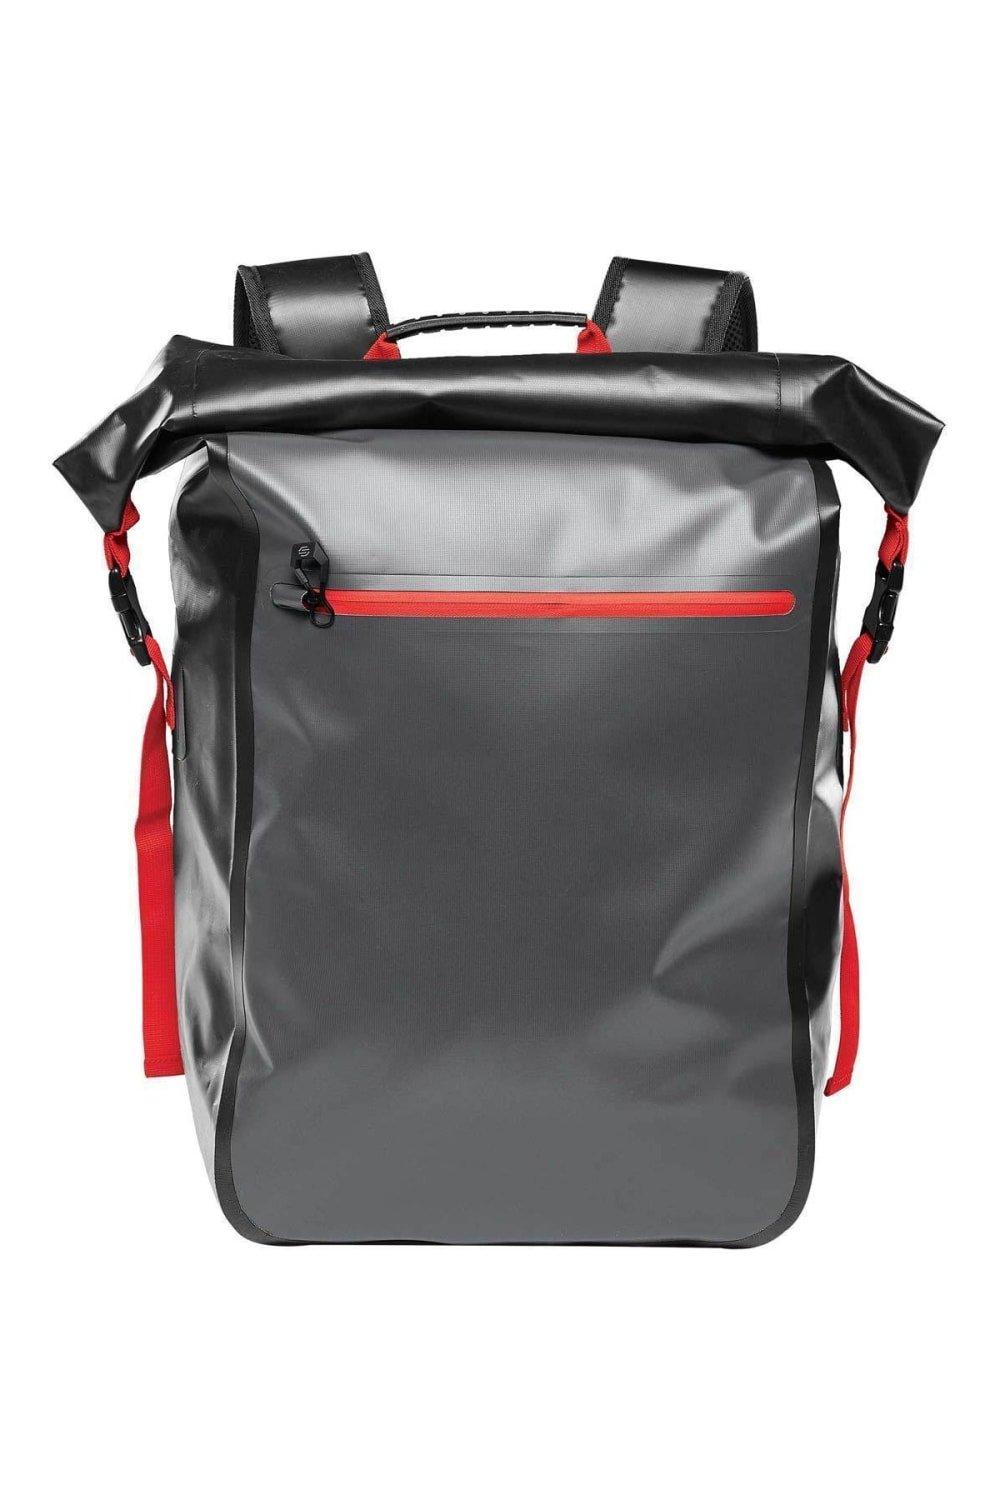 Kemano Backpack